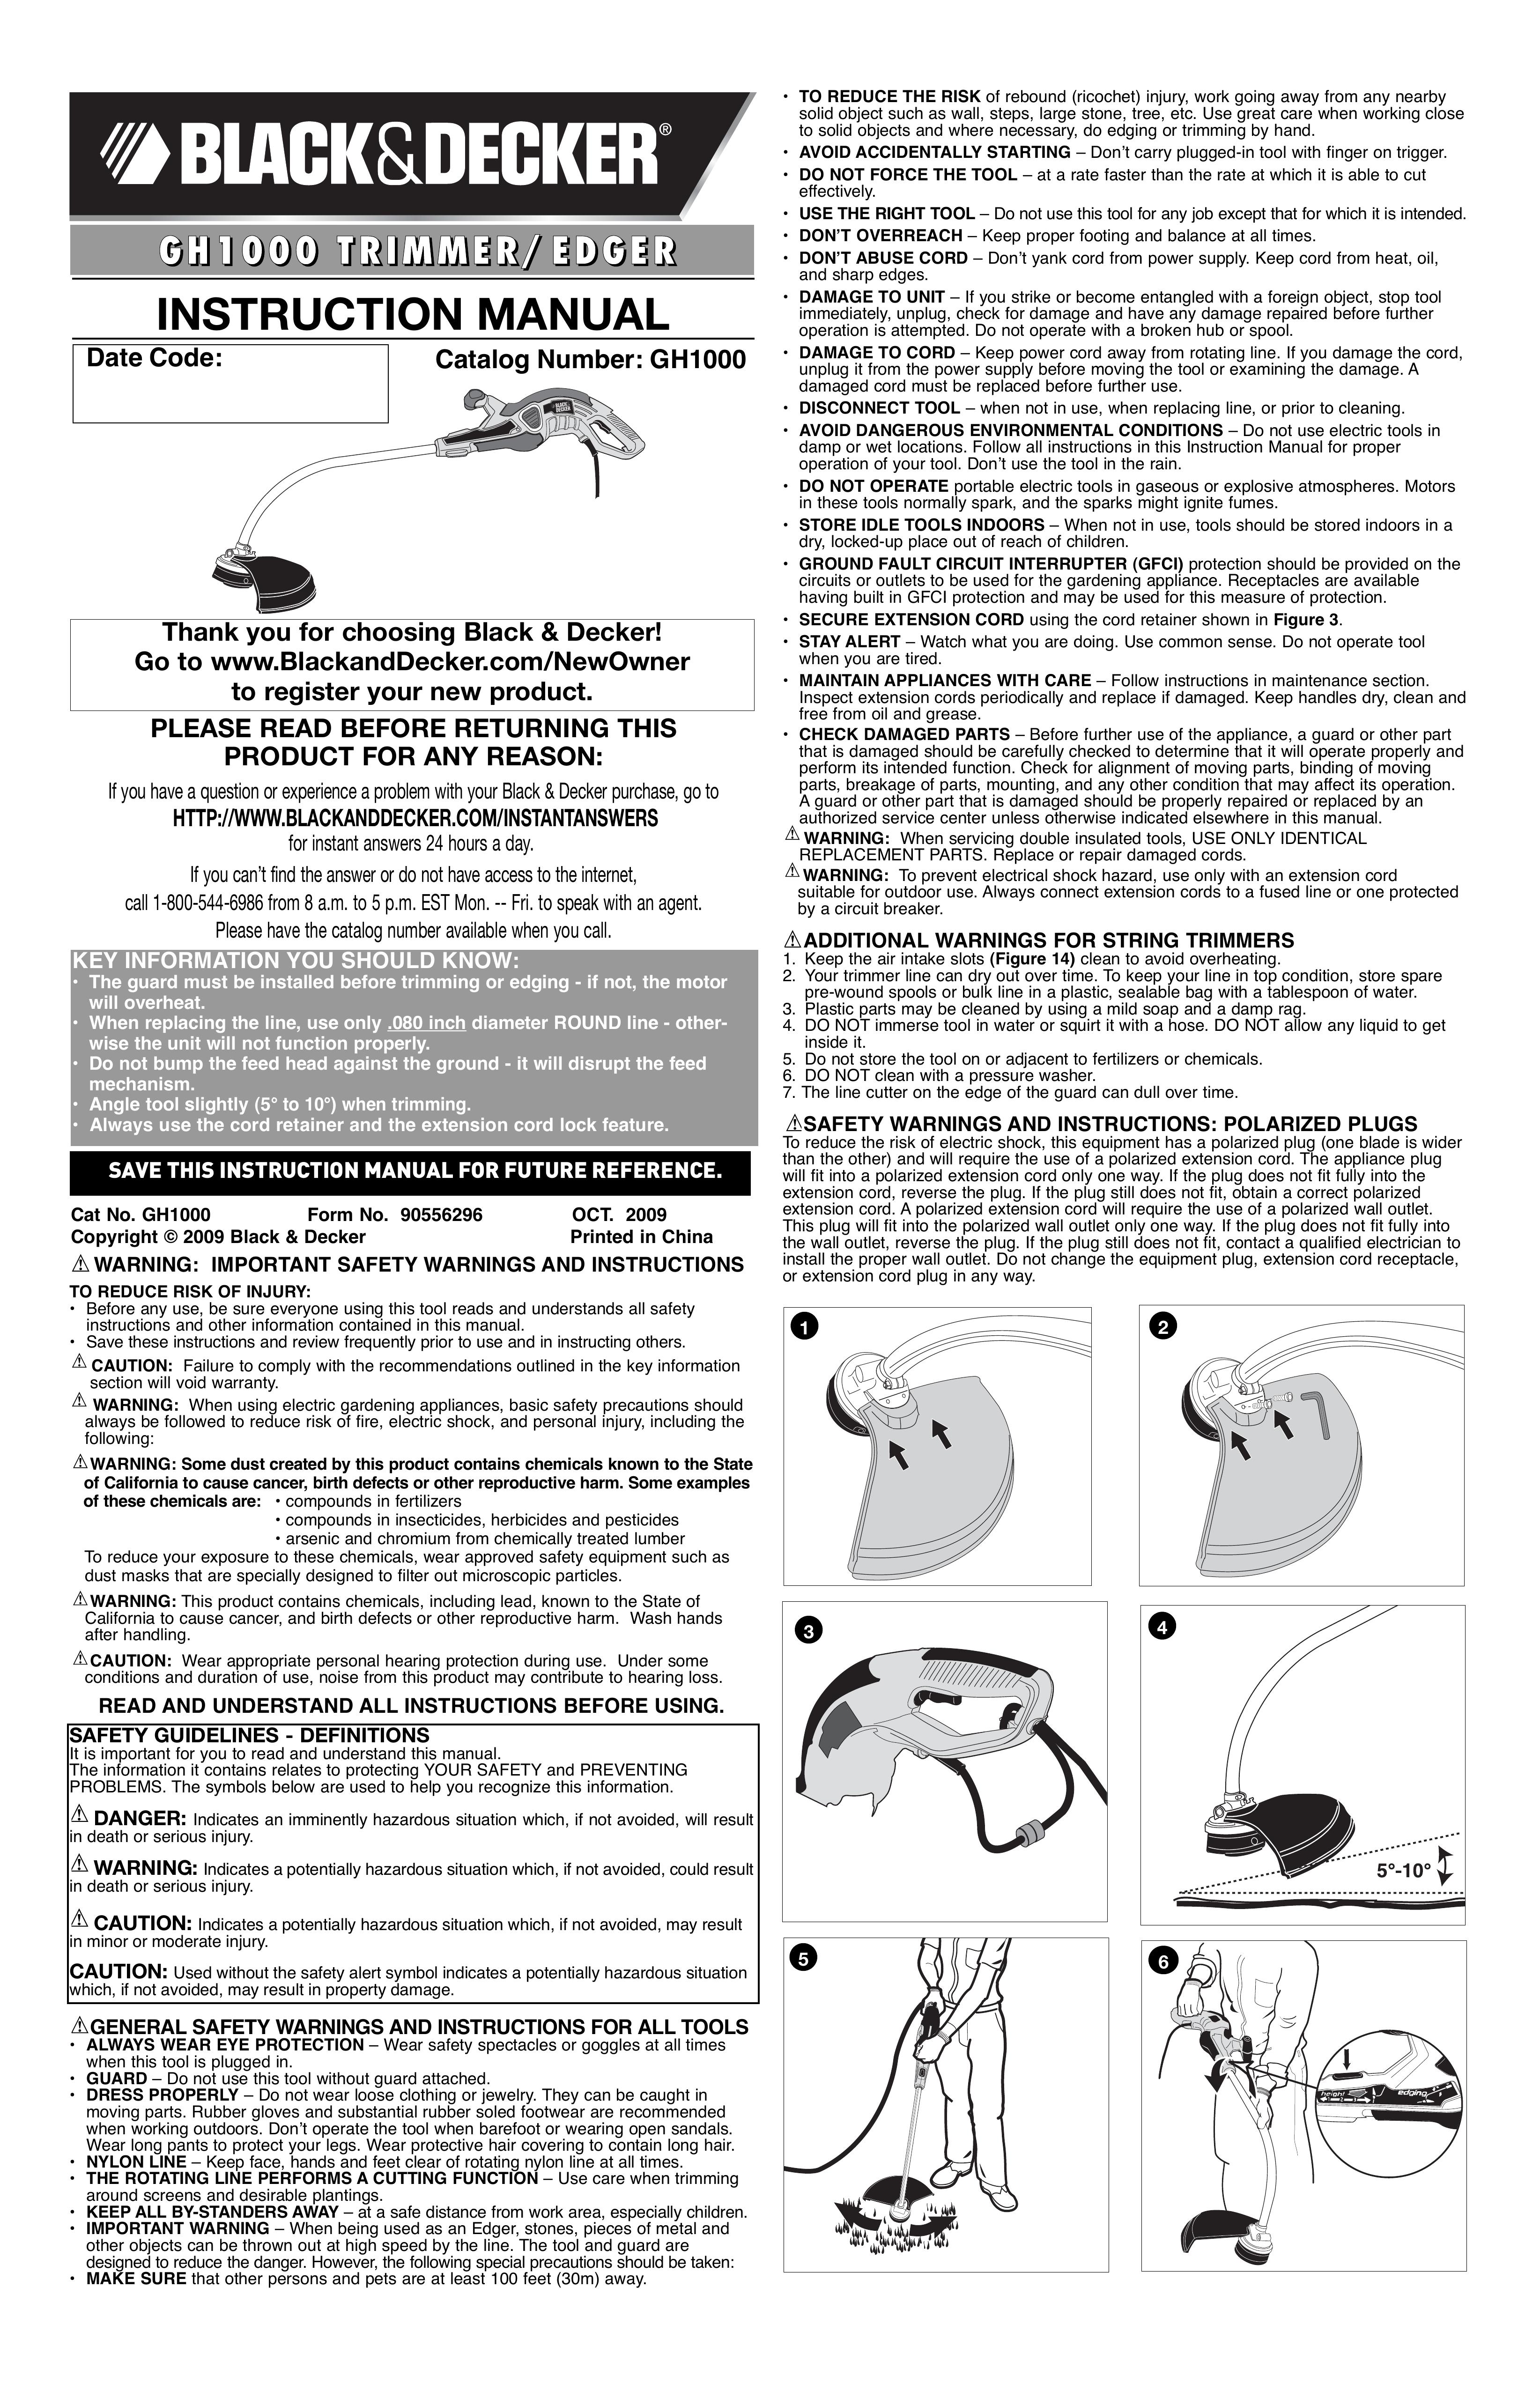 Black & Decker GH1000 Trimmer User Manual